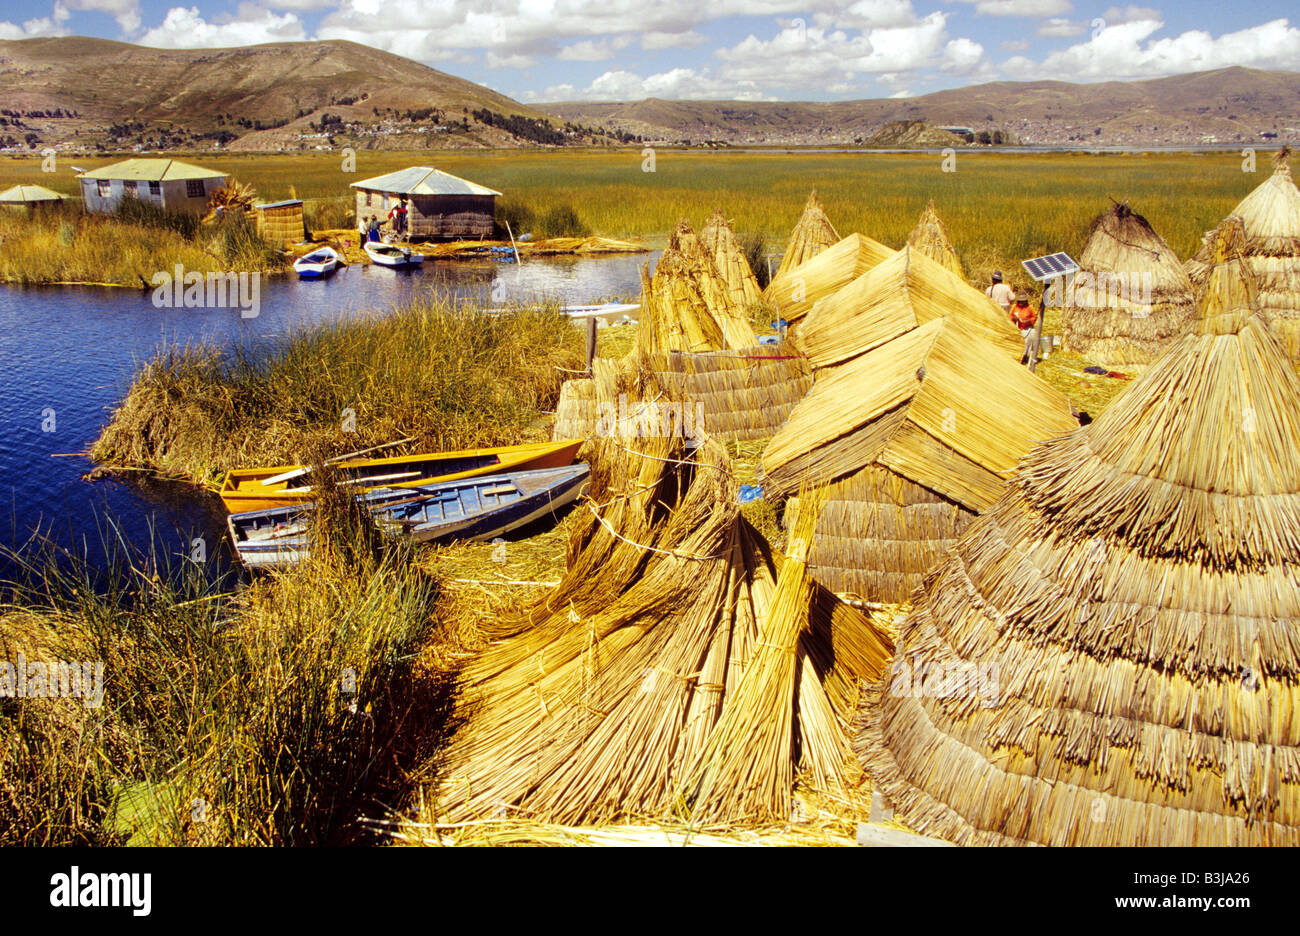 Floating islands and Huts made of reed of the Uru people of lake Titikaka aka Titicaca in Puno, Peru Stock Photo